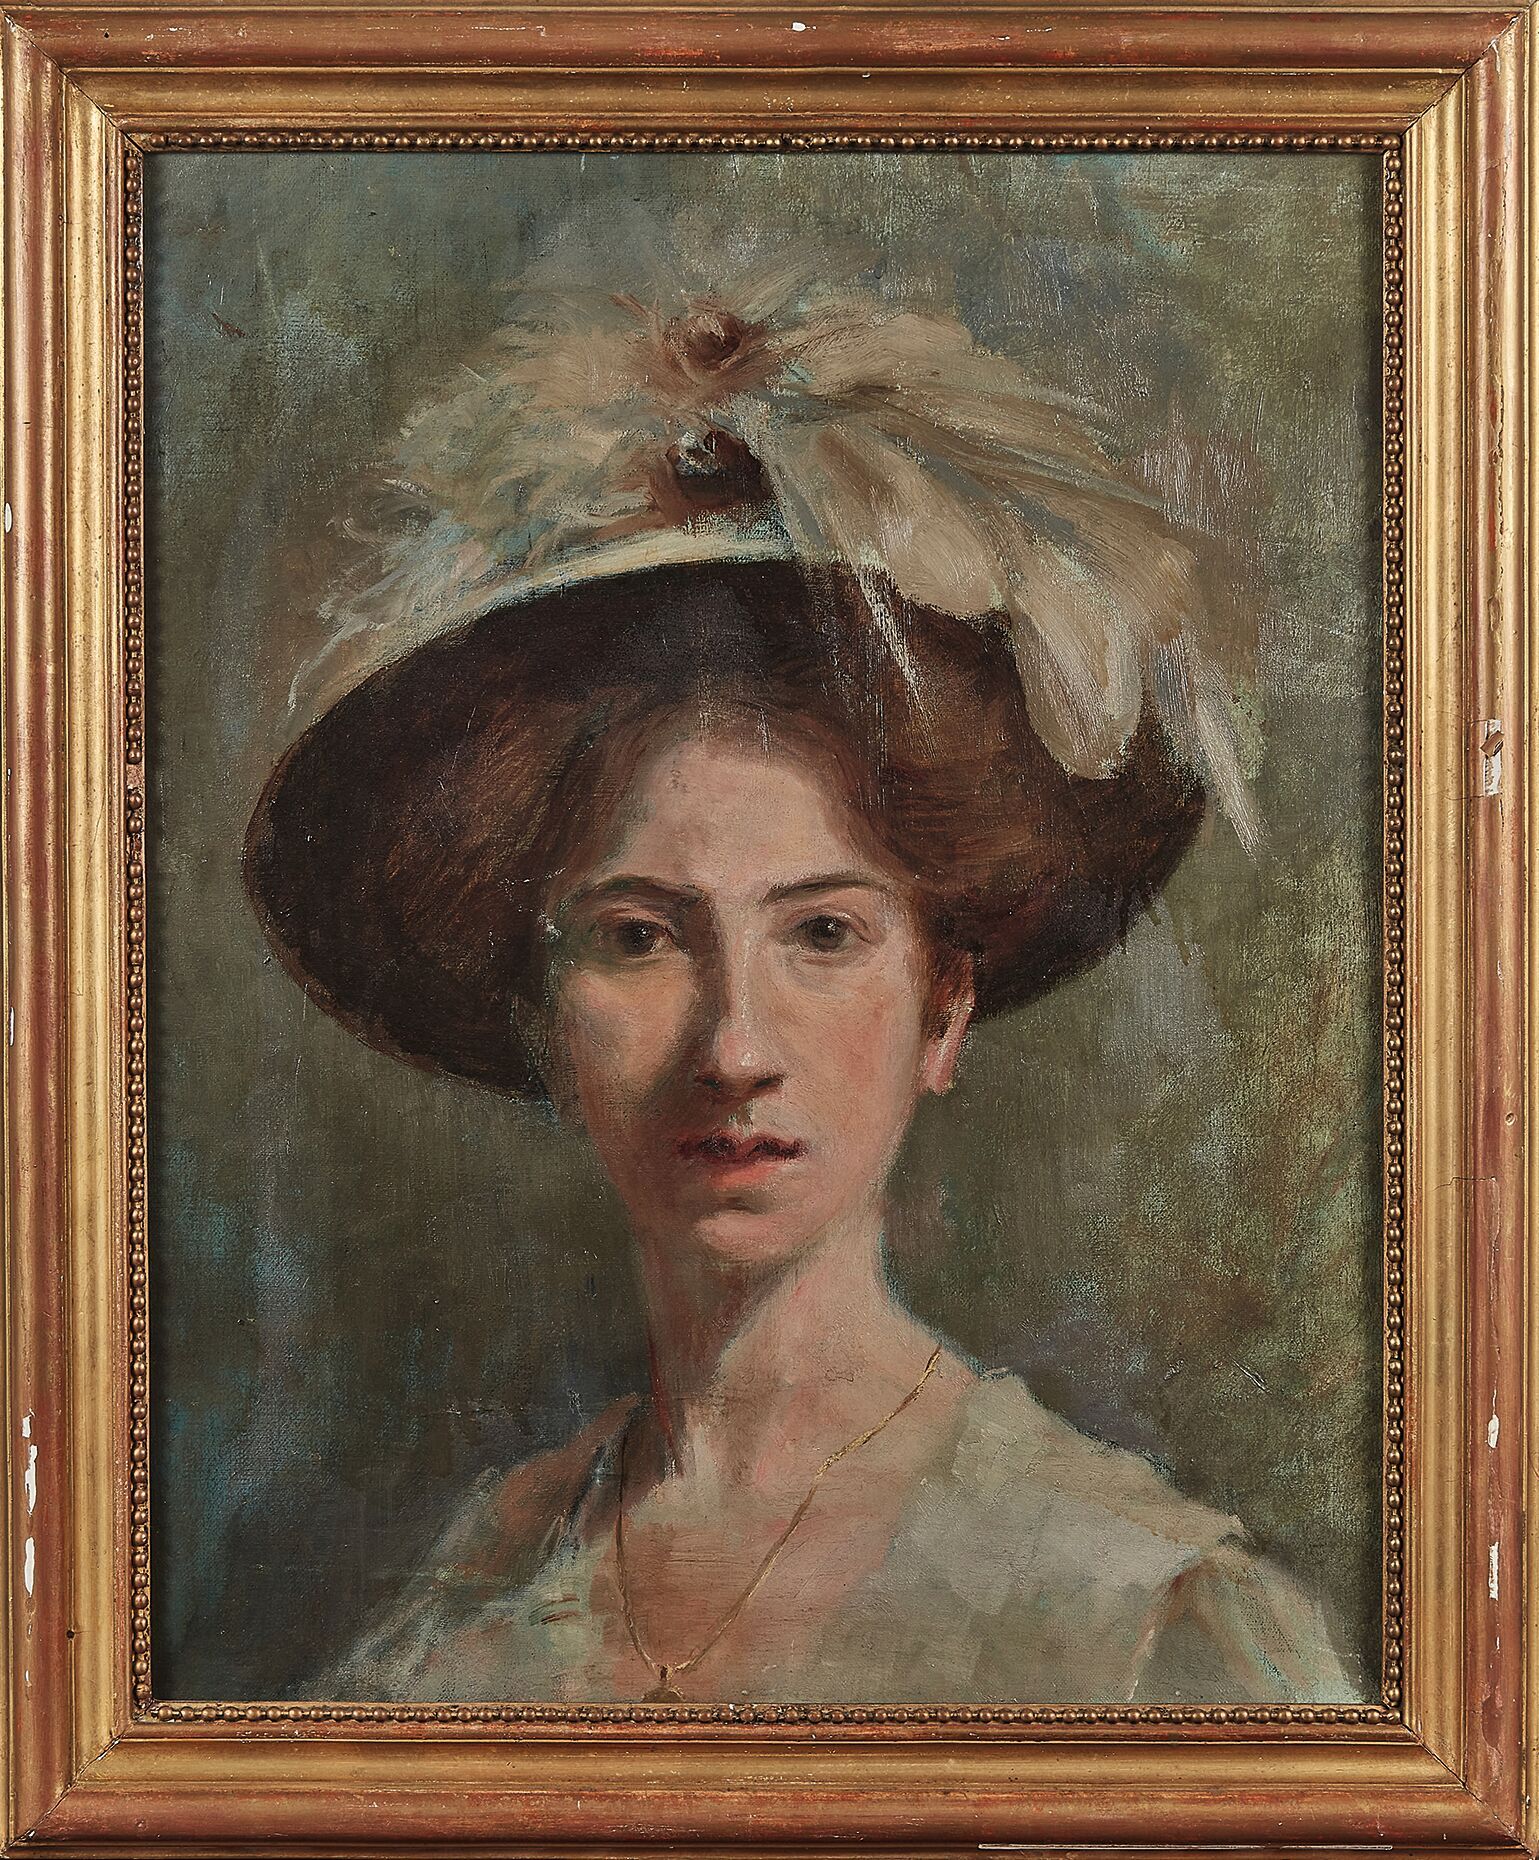 Null ESCUELA MODERNA
Retrato de mujer con sombrero
Óleo sobre lienzo
55 x 46 cm